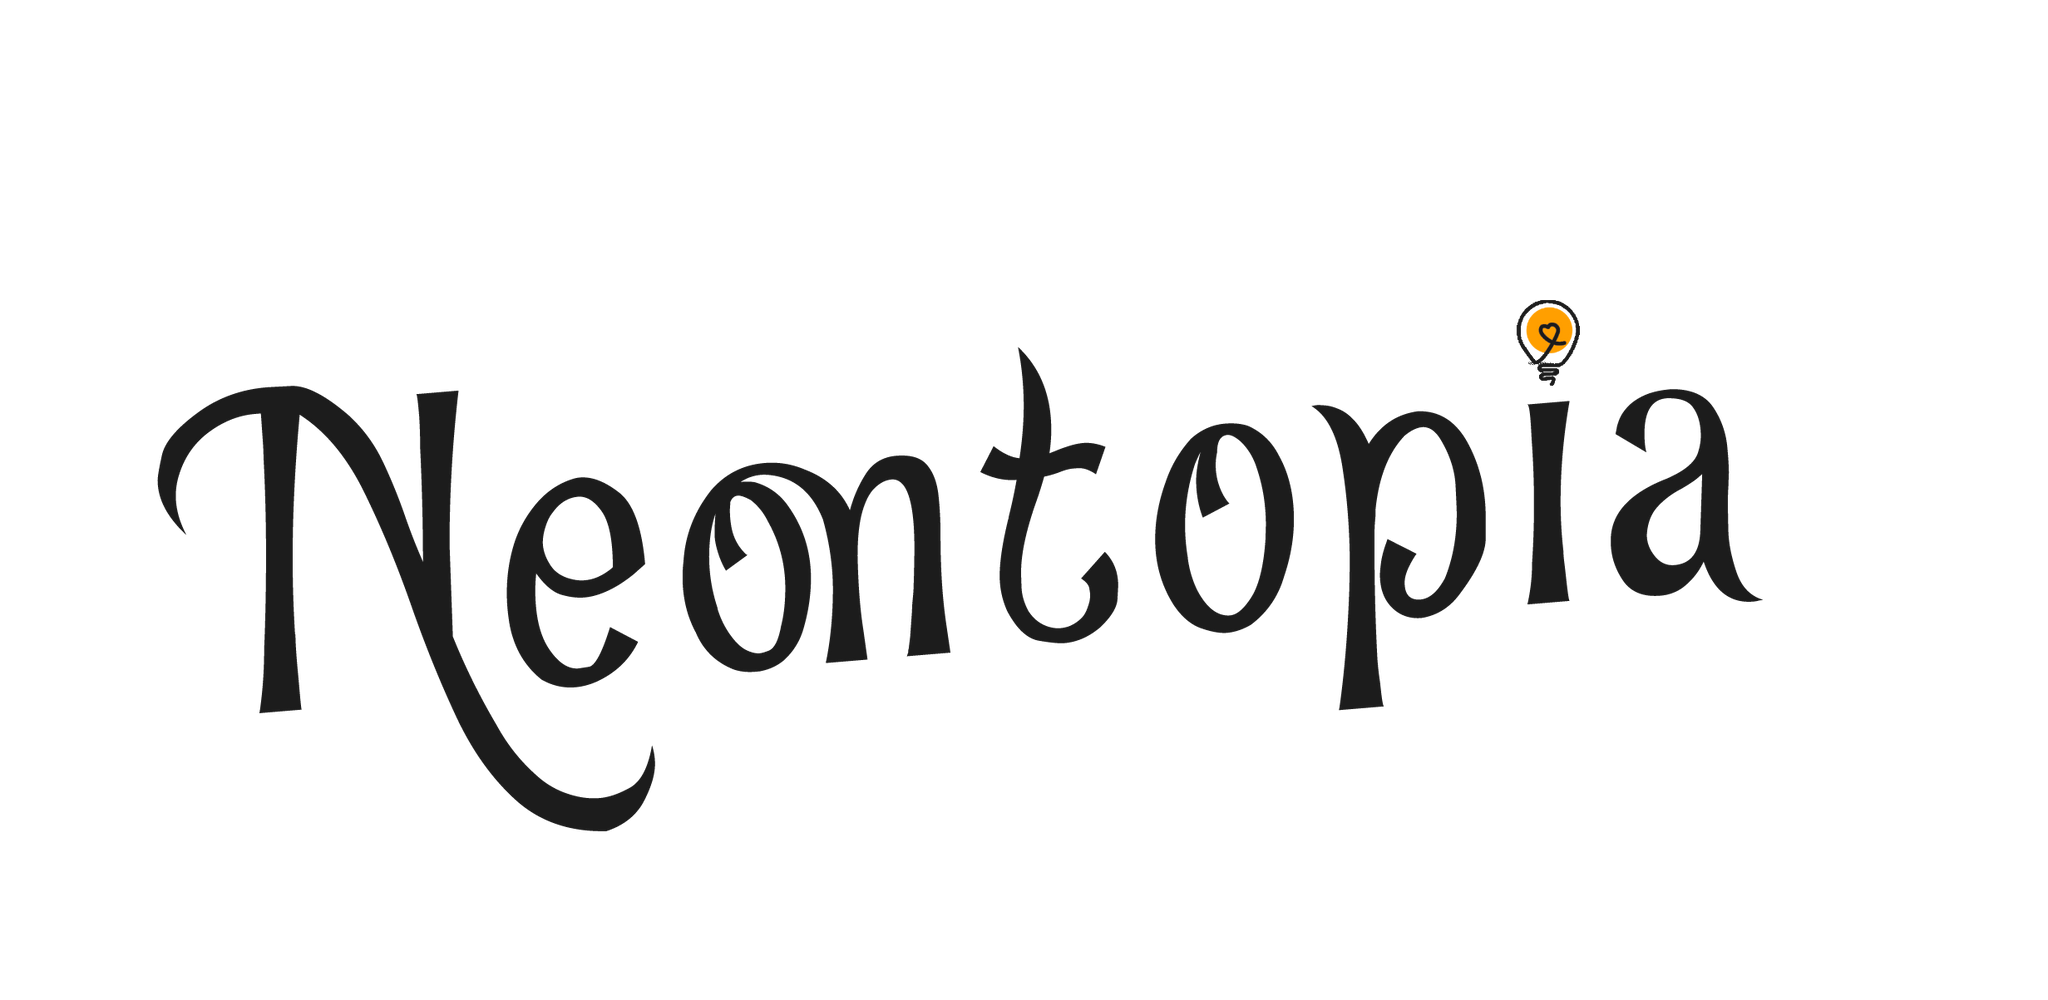 Neontopia